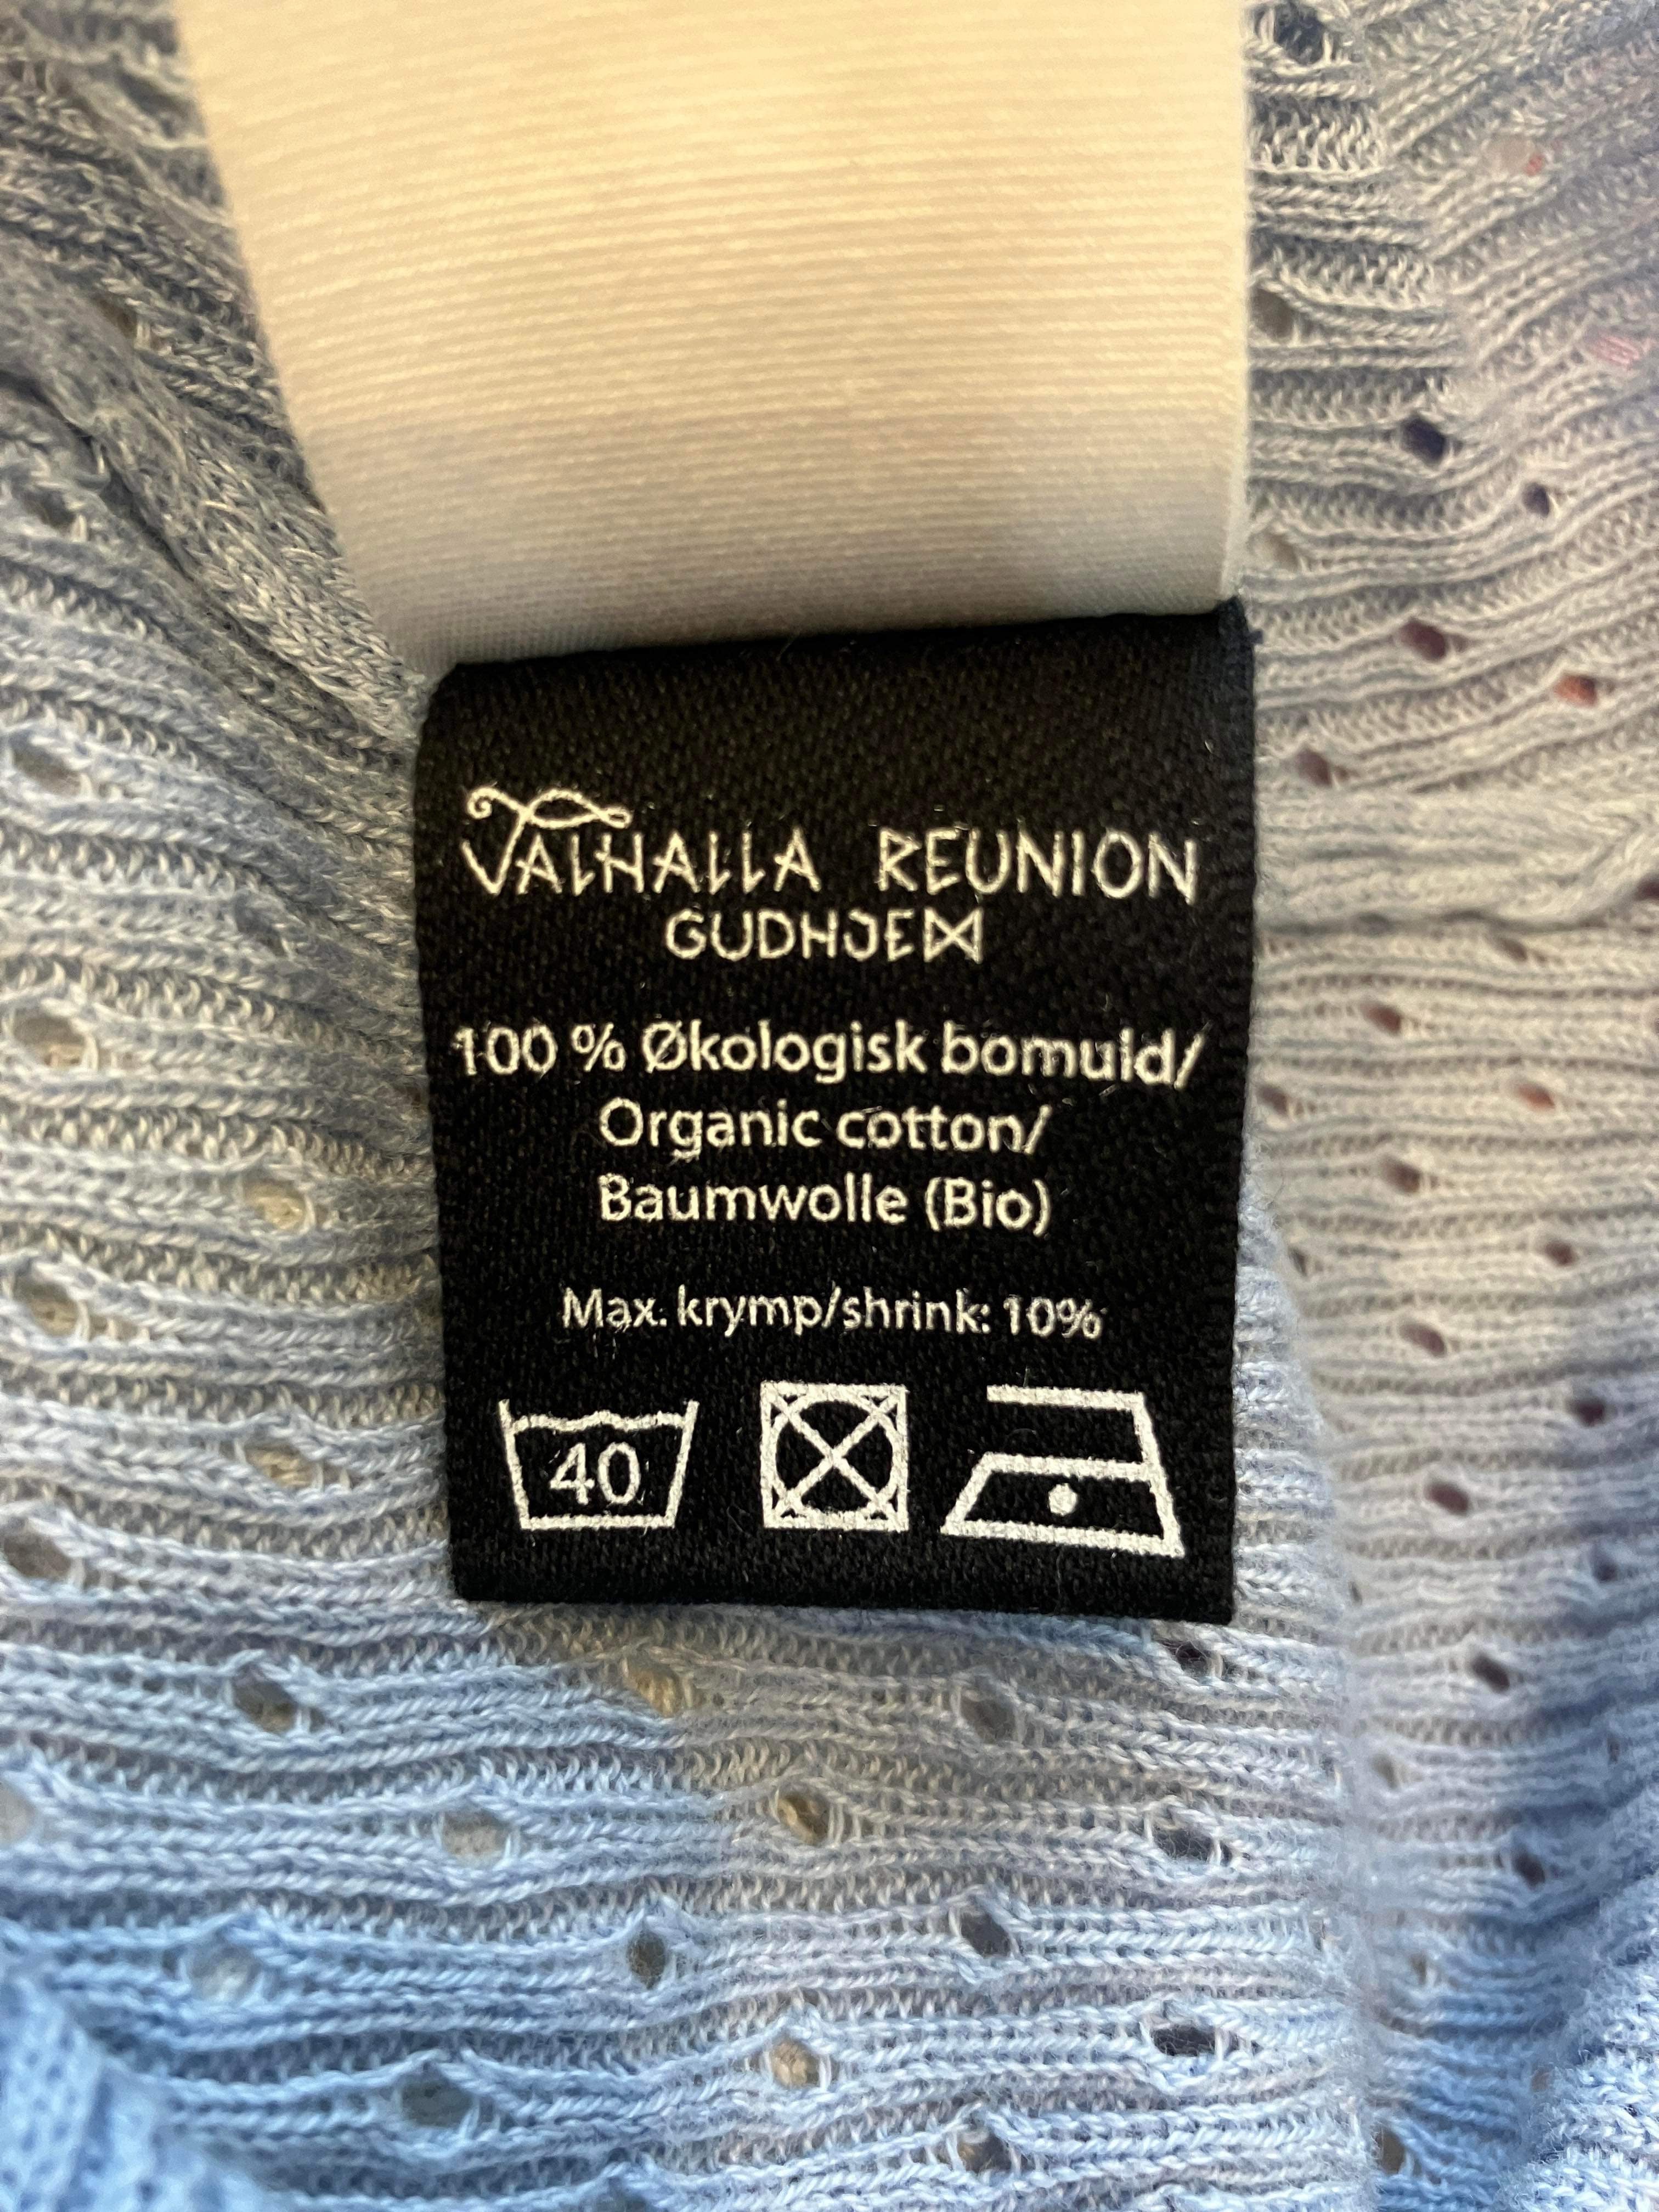 Valhalla Reunion Gudhjem - Bluse - Size: XS